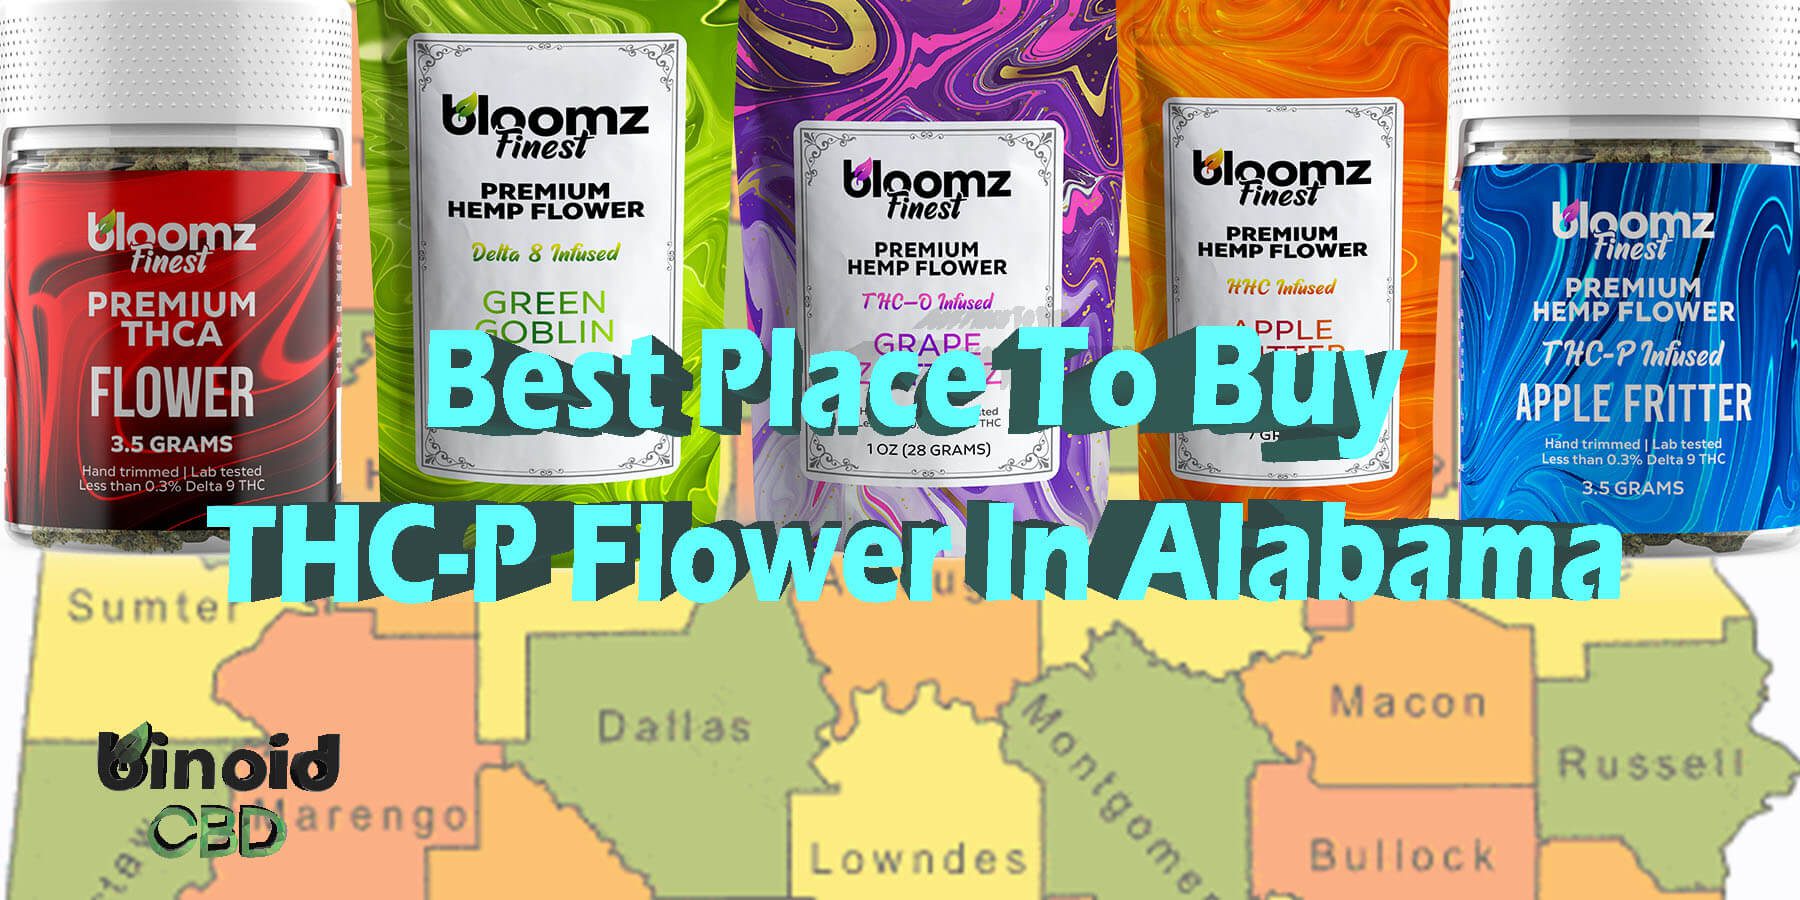 Buy THCP Hemp Flower Alabama Pre Rolls Get Online Near Me For Sale Best Brand Strongest Real Legal Store Shop Reddit